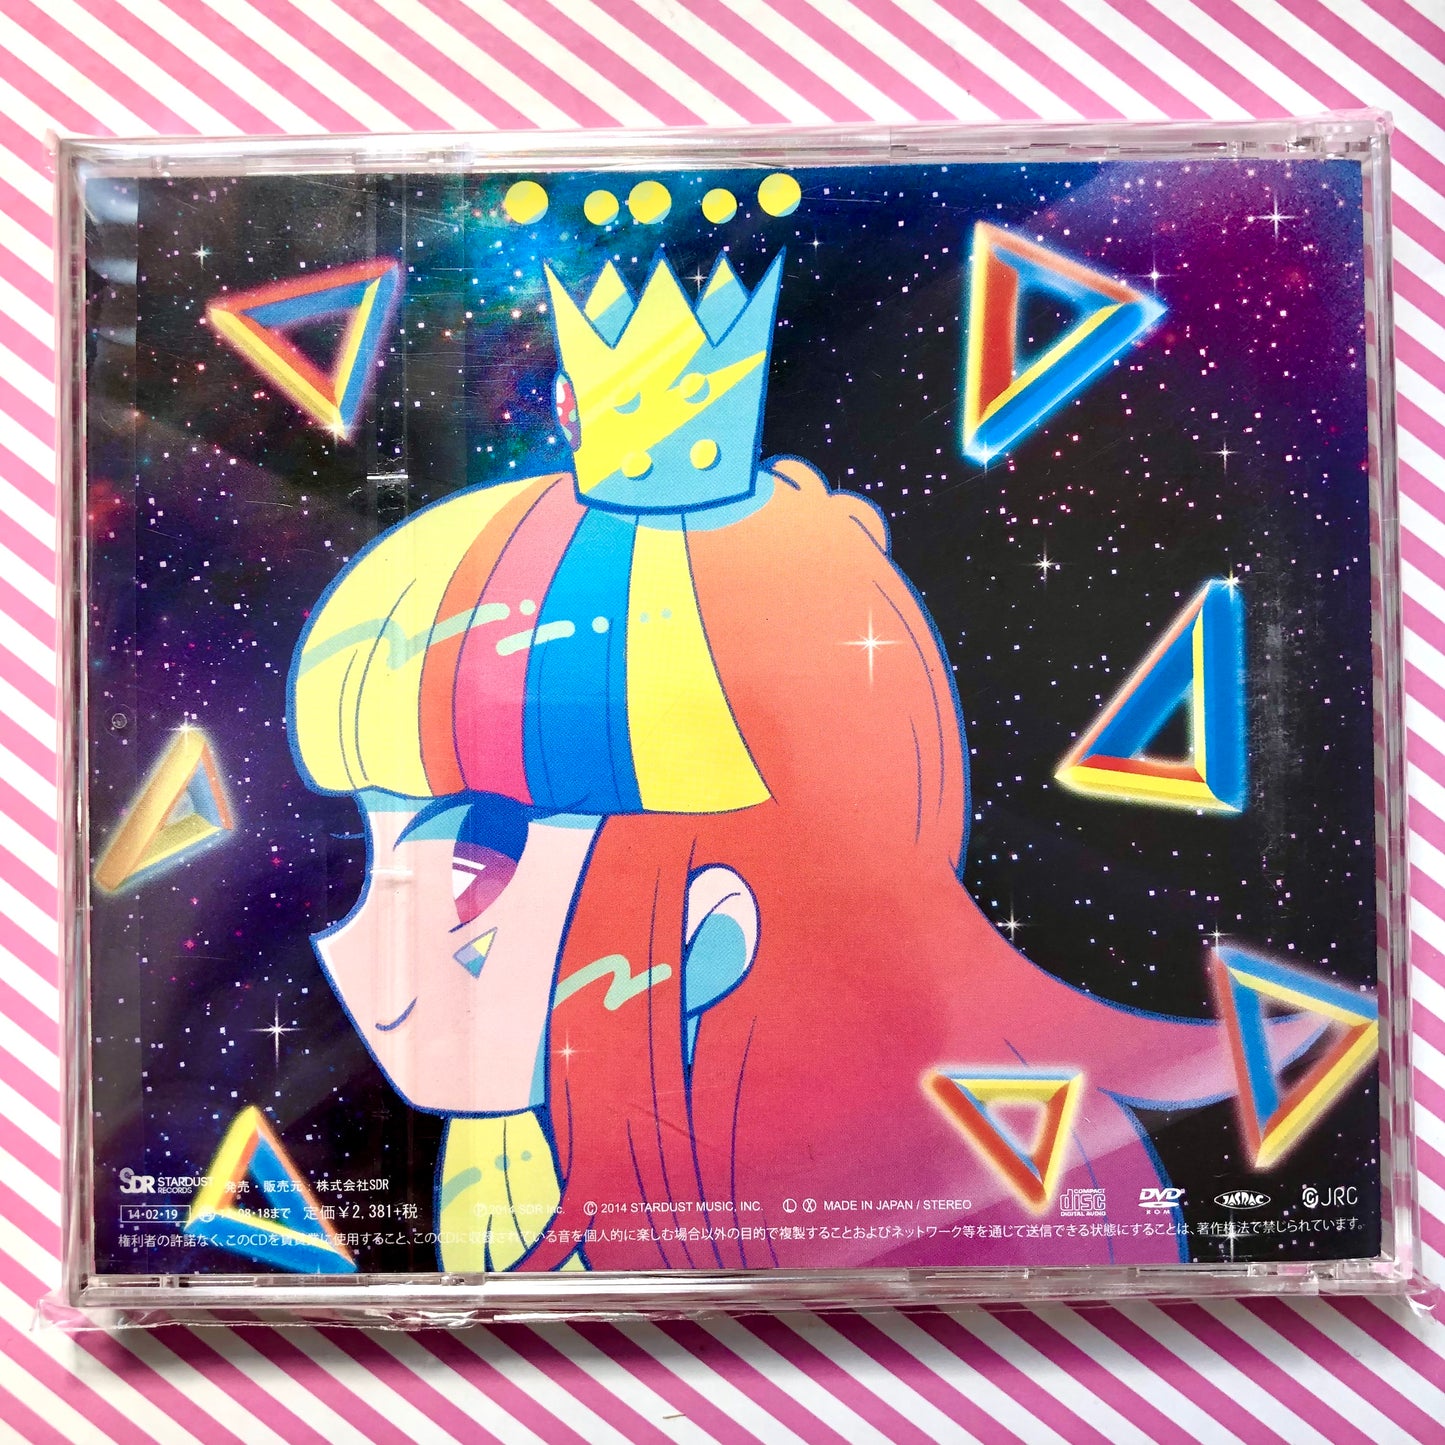 GALACO Super Best [Deluxe Edition] (CD + DVD) - Vocaloid Hatsune Miku Compilation Album CD